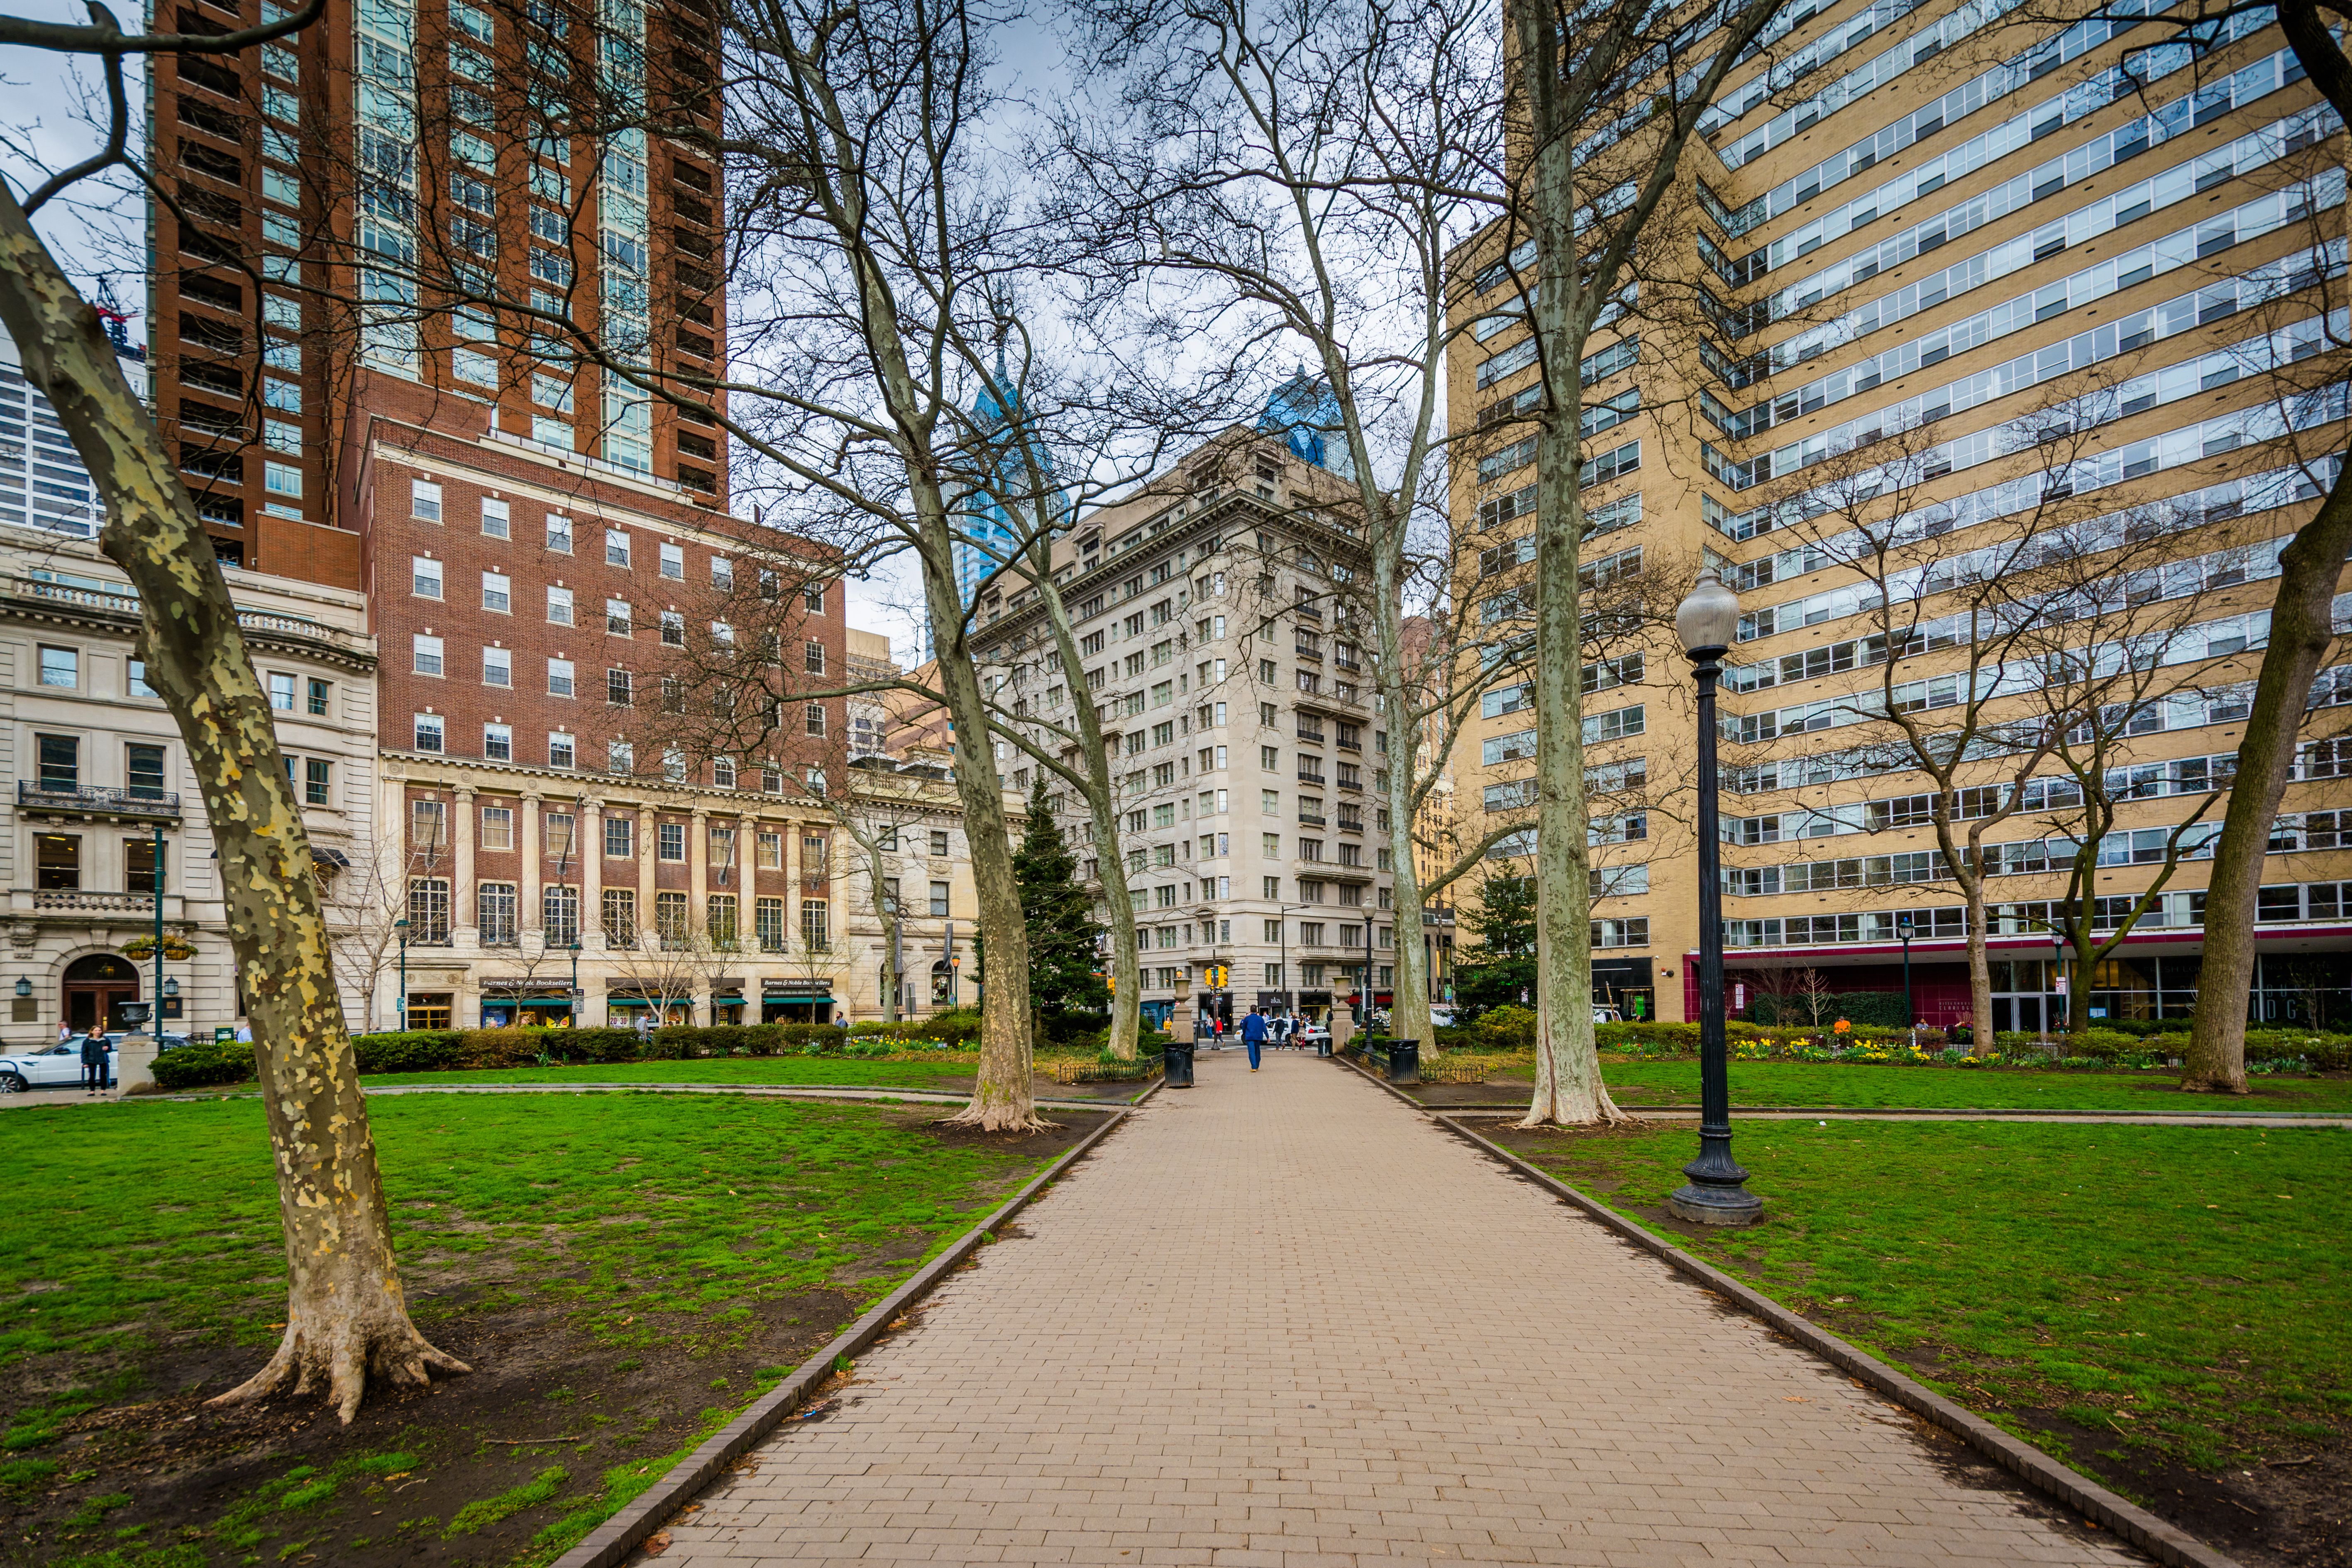 Walkway and buildings at Rittenhouse Square, in Philadelphia, Pennsylvania